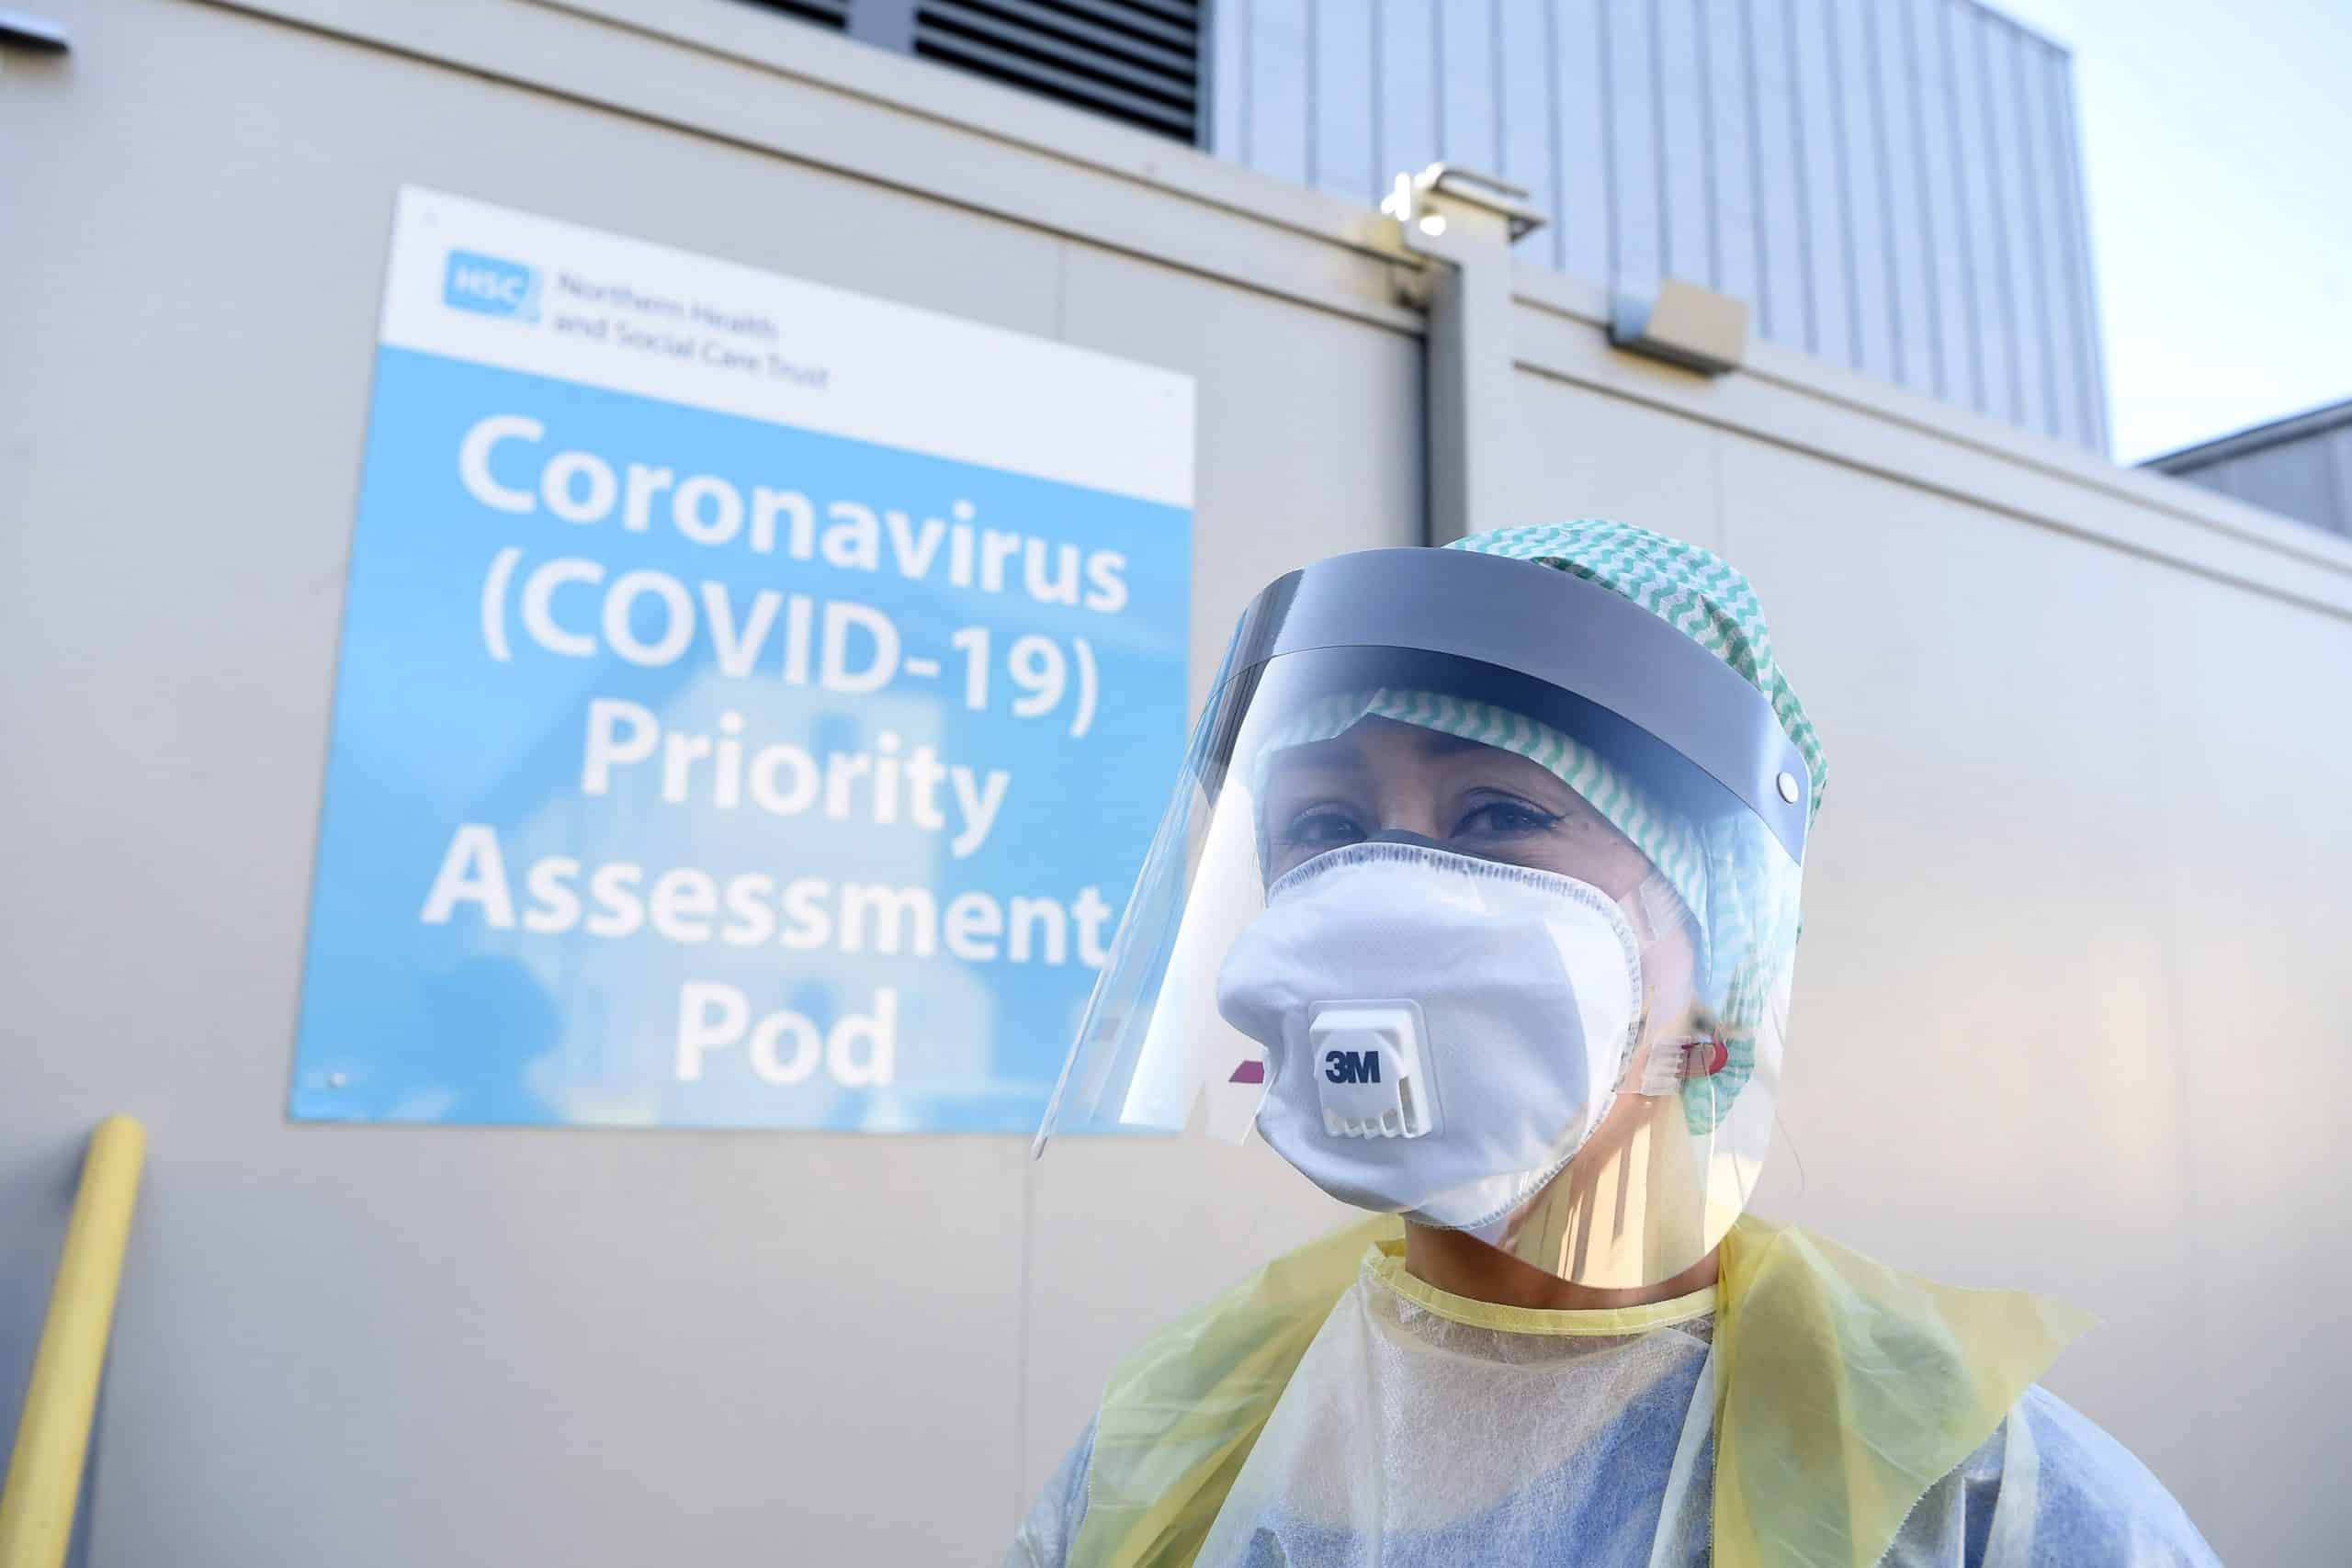 Coronavirus death toll surpasses 3,400 globally as cases hit 100,000